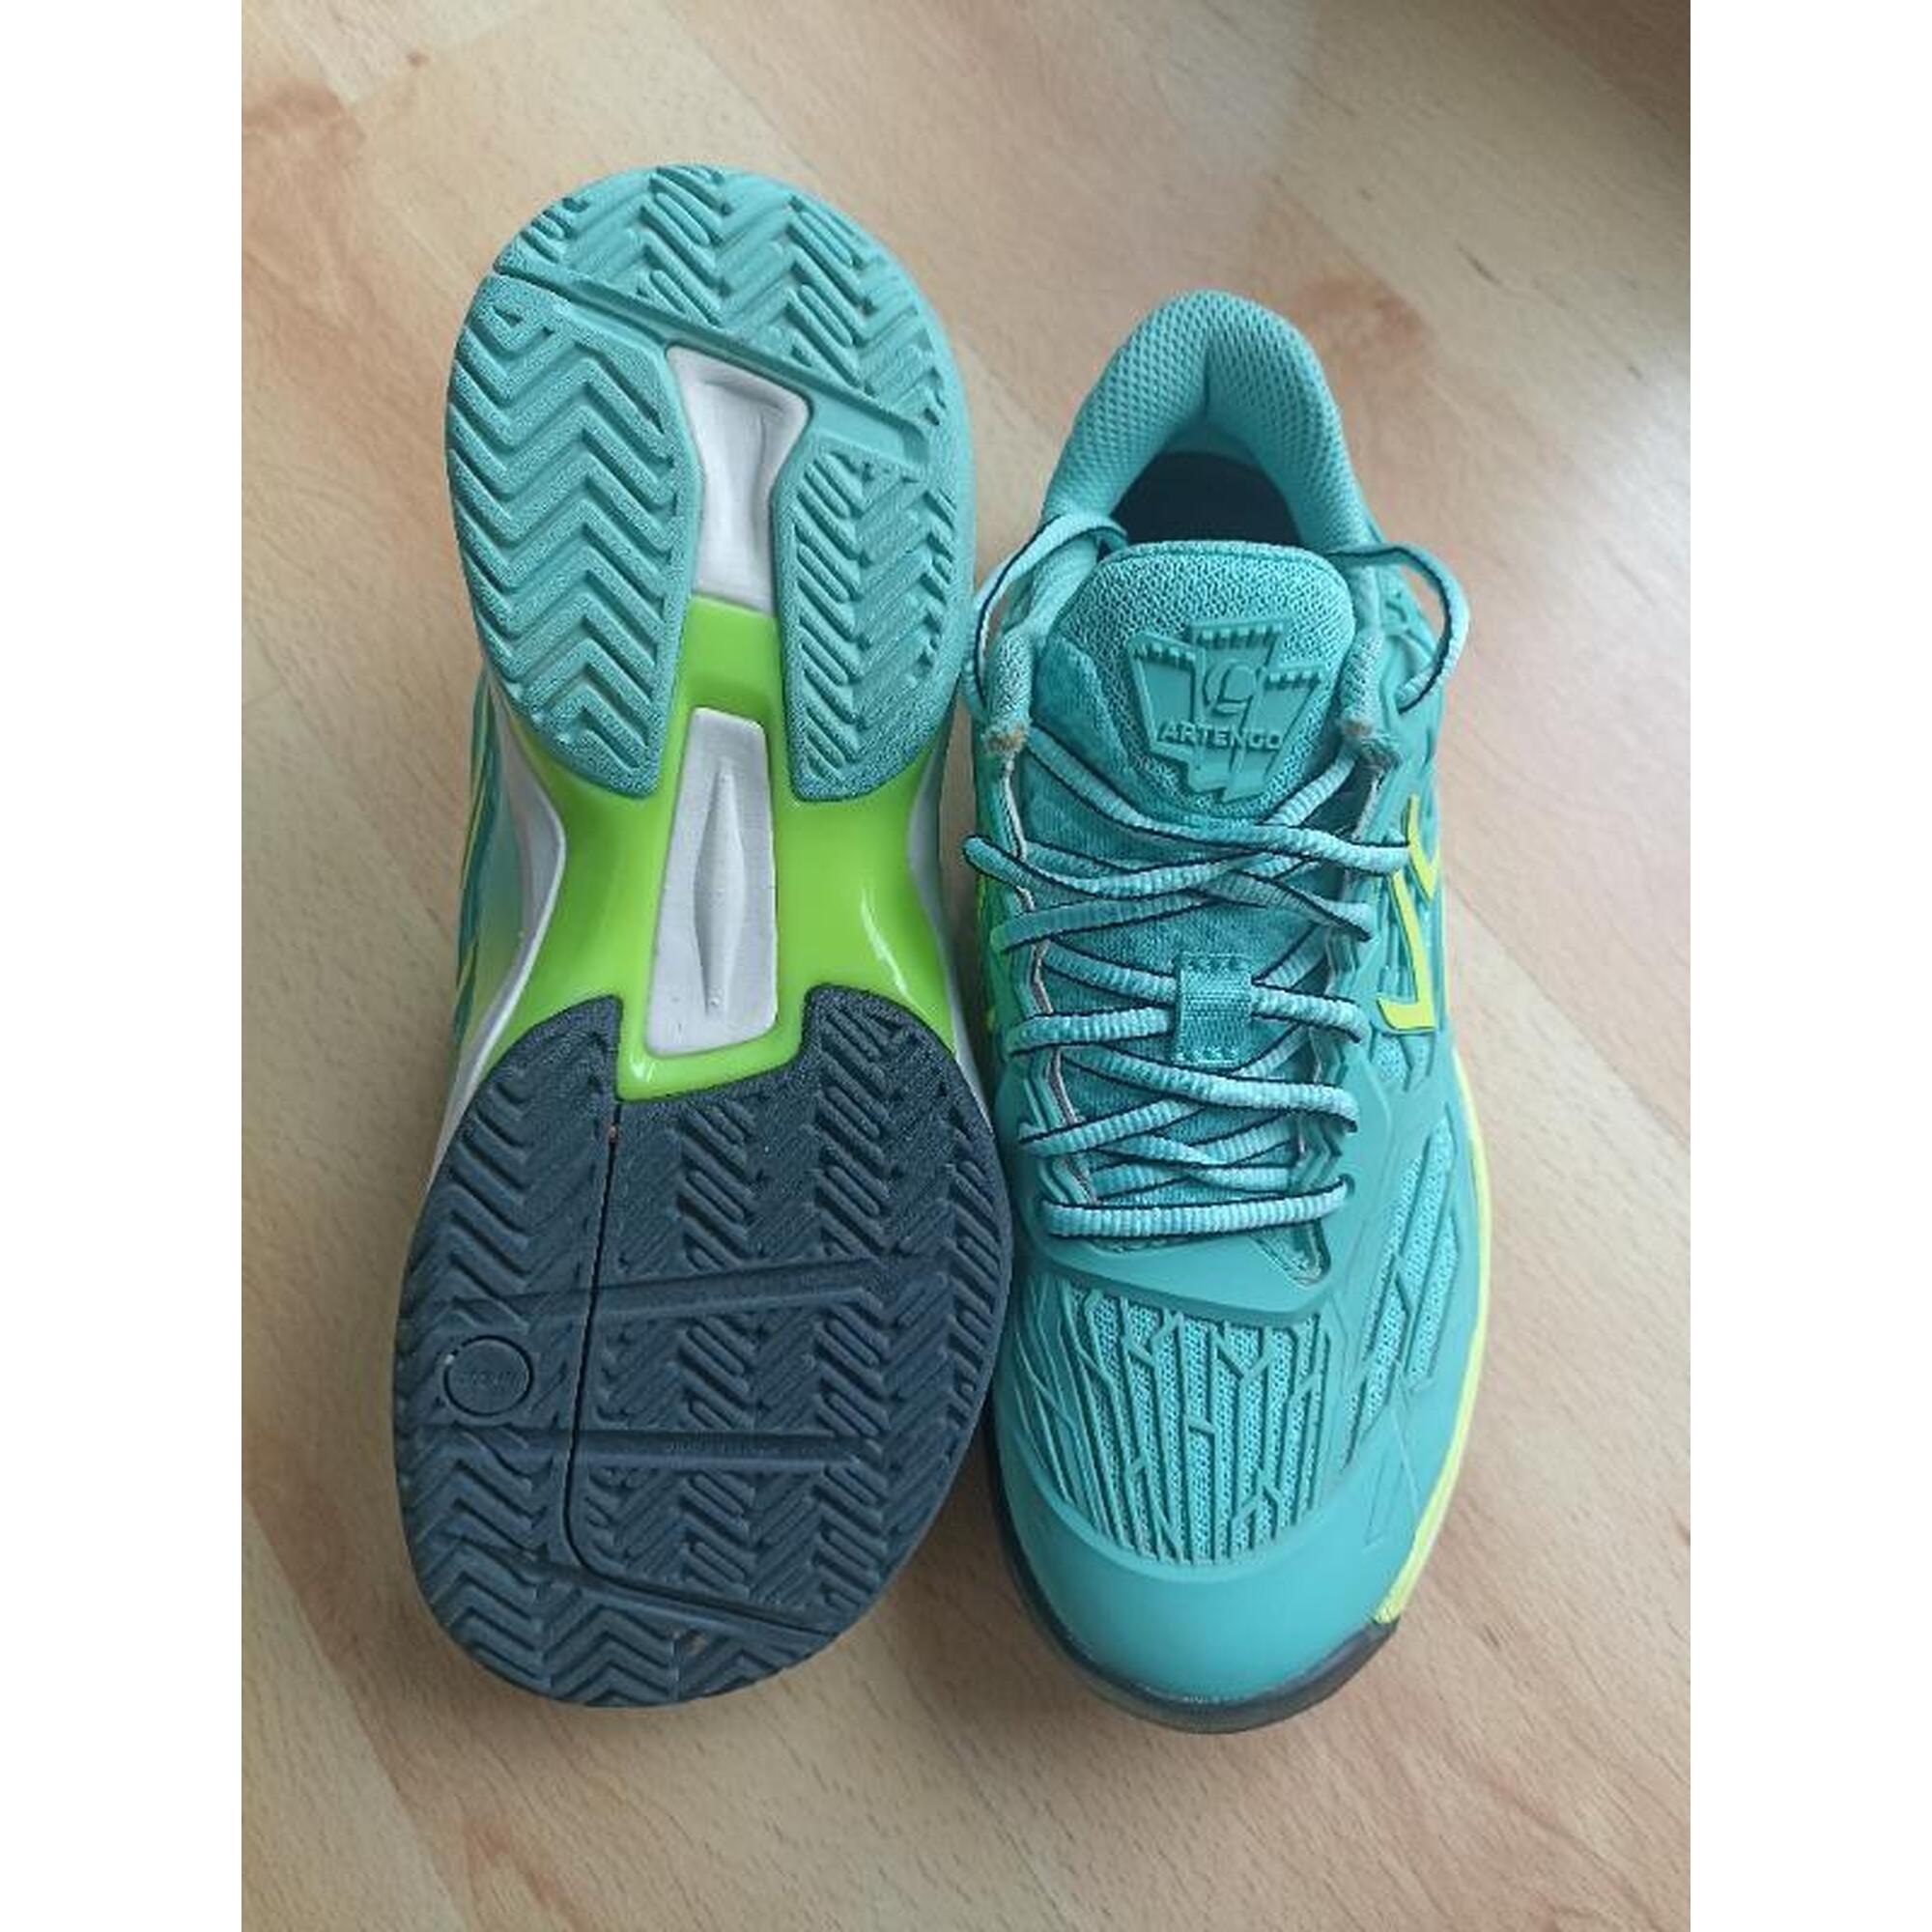 C2C - Chaussures de tennis TS990 femme, 37